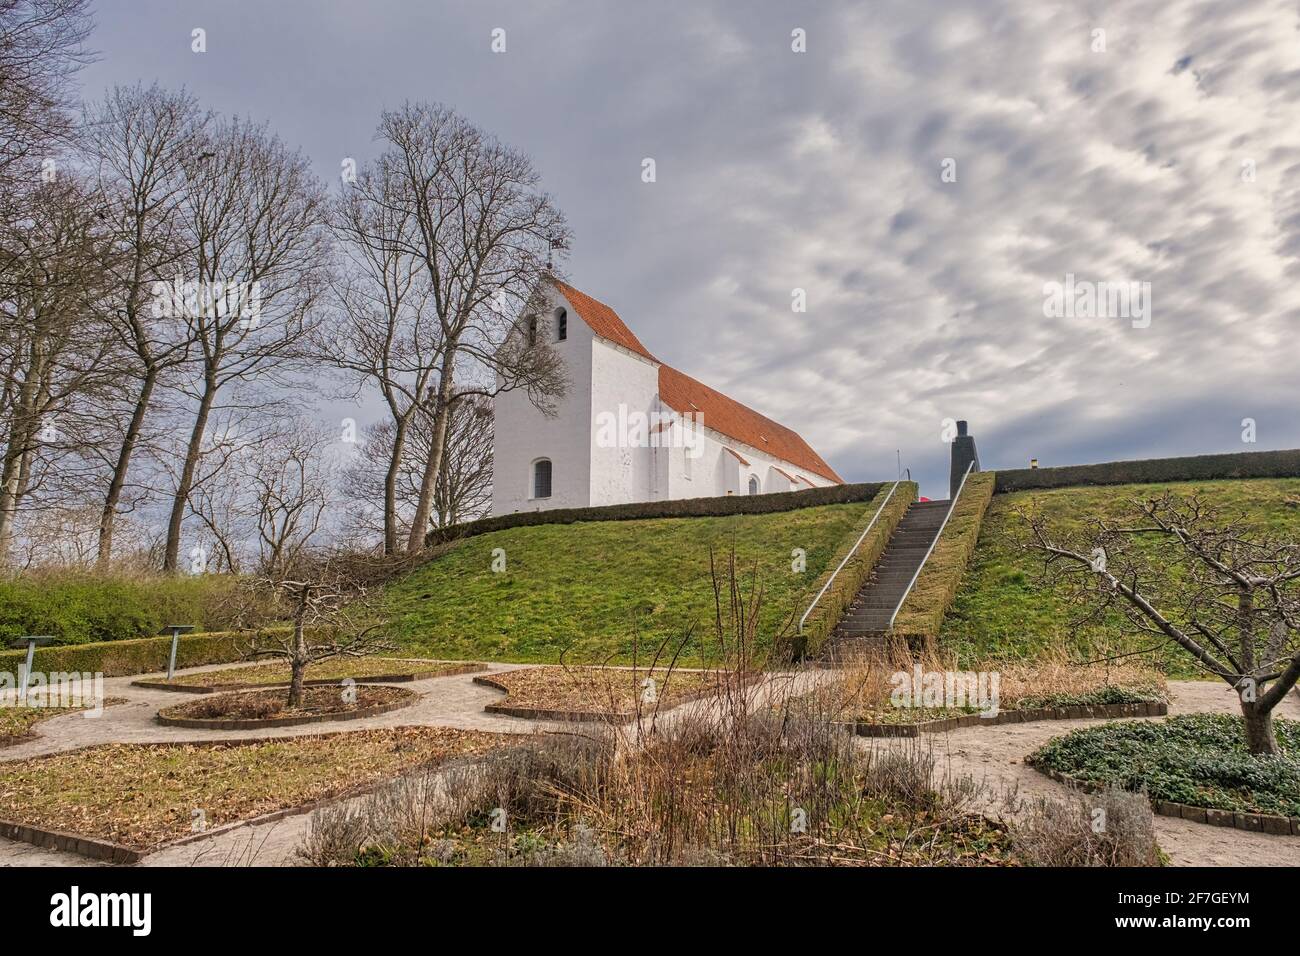 Asmild old monastery church in Asmild, Denmark Stock Photo